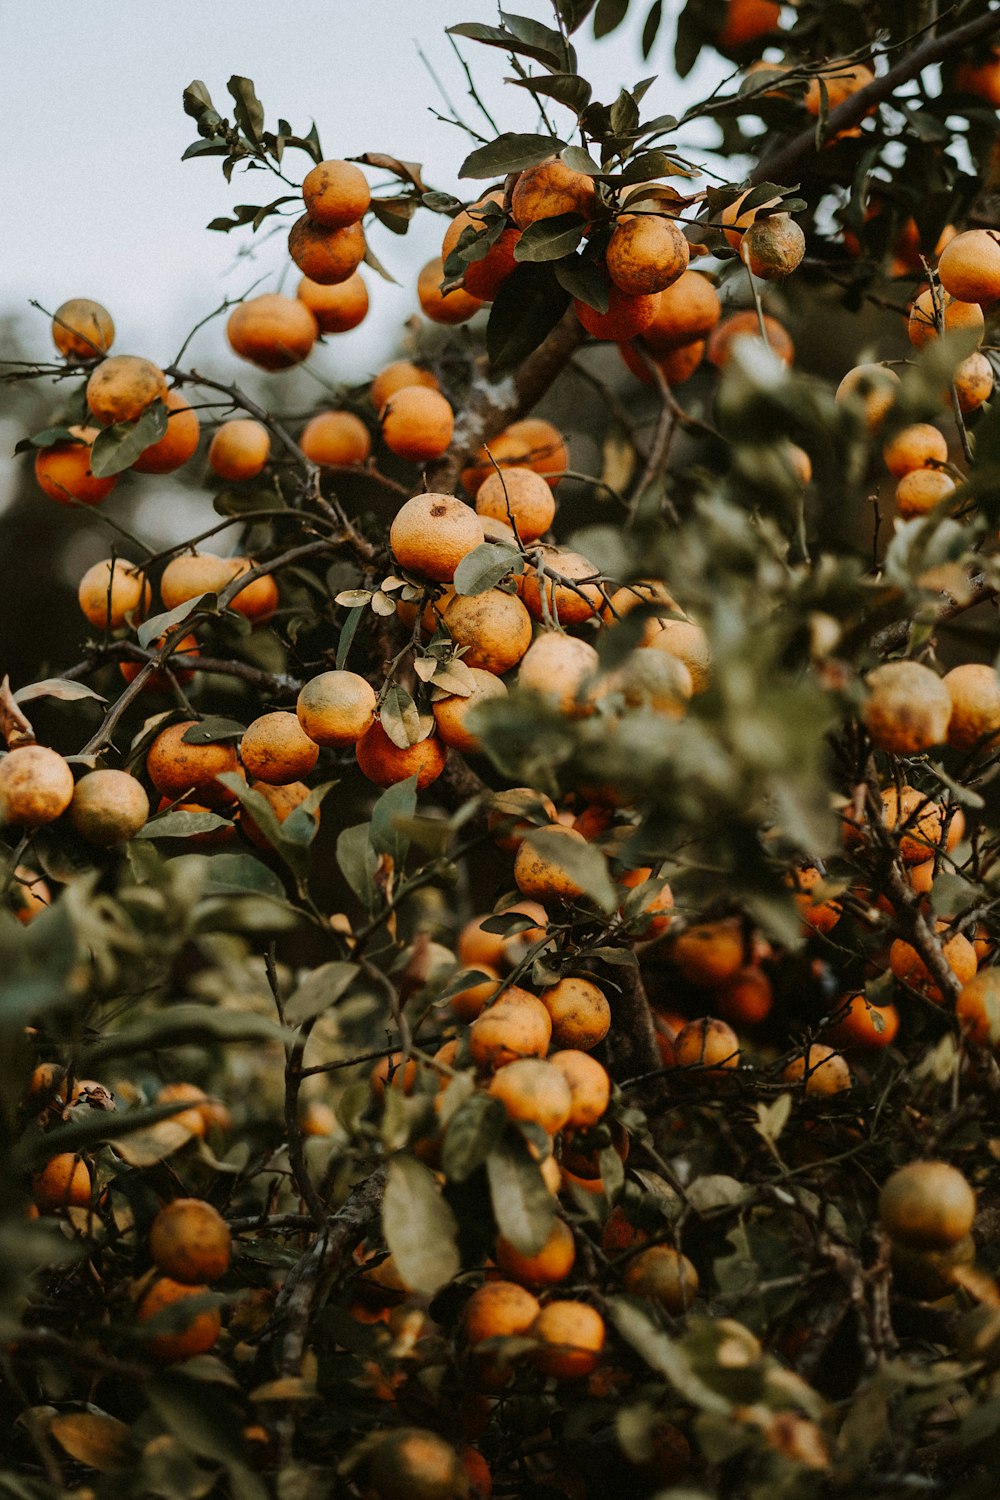 orange fruits on tree during daytime